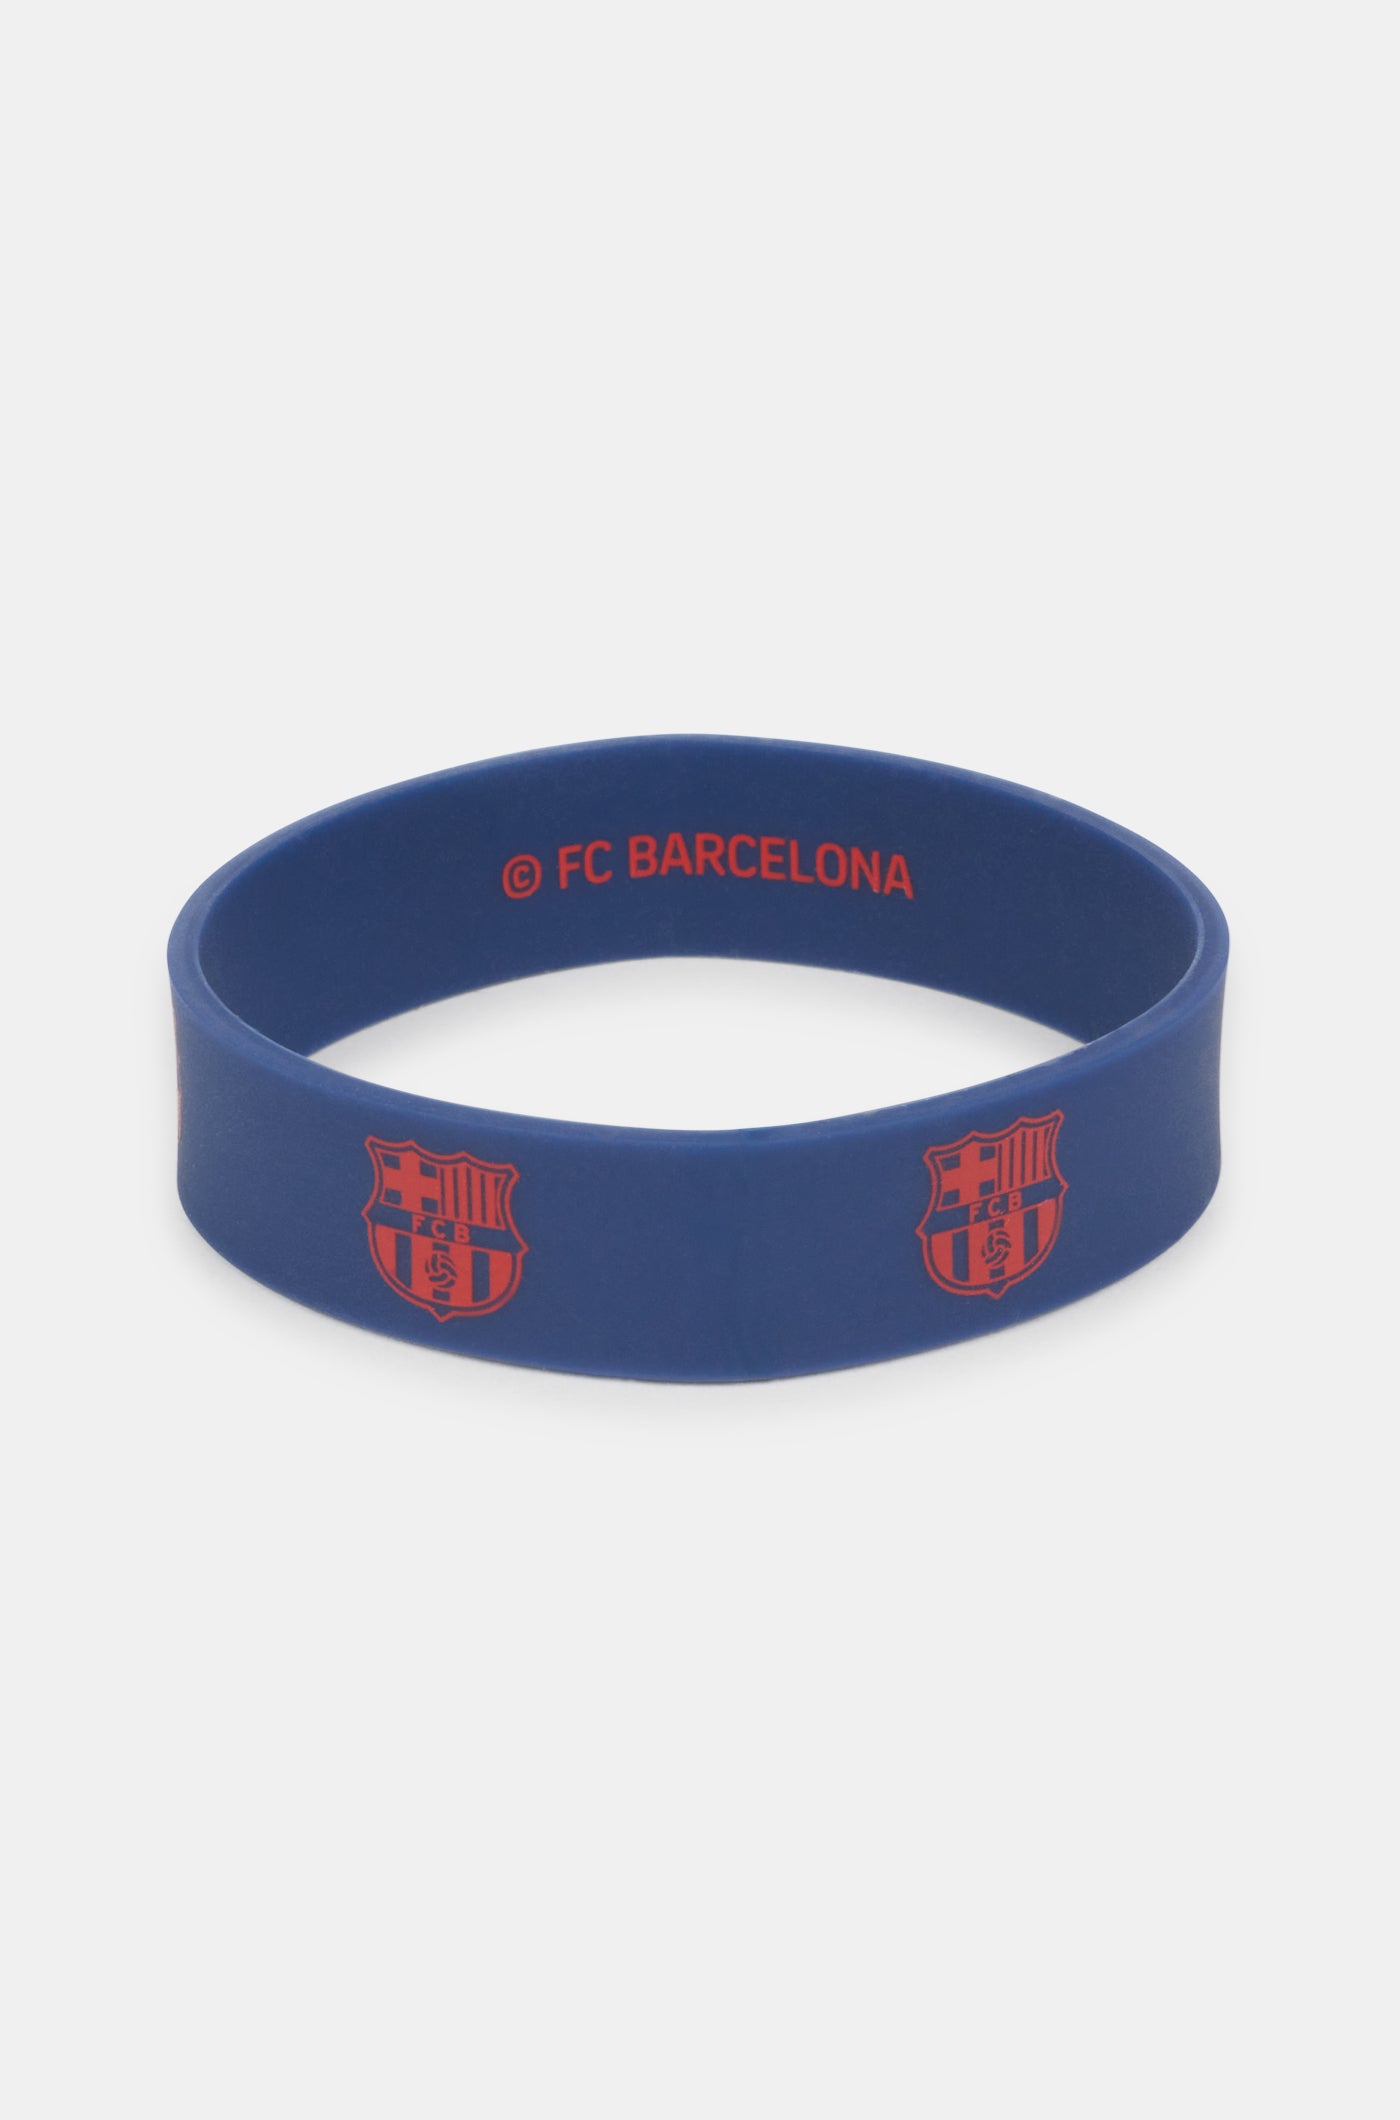 Braçalet elàstic escut blau del FC Barcelona